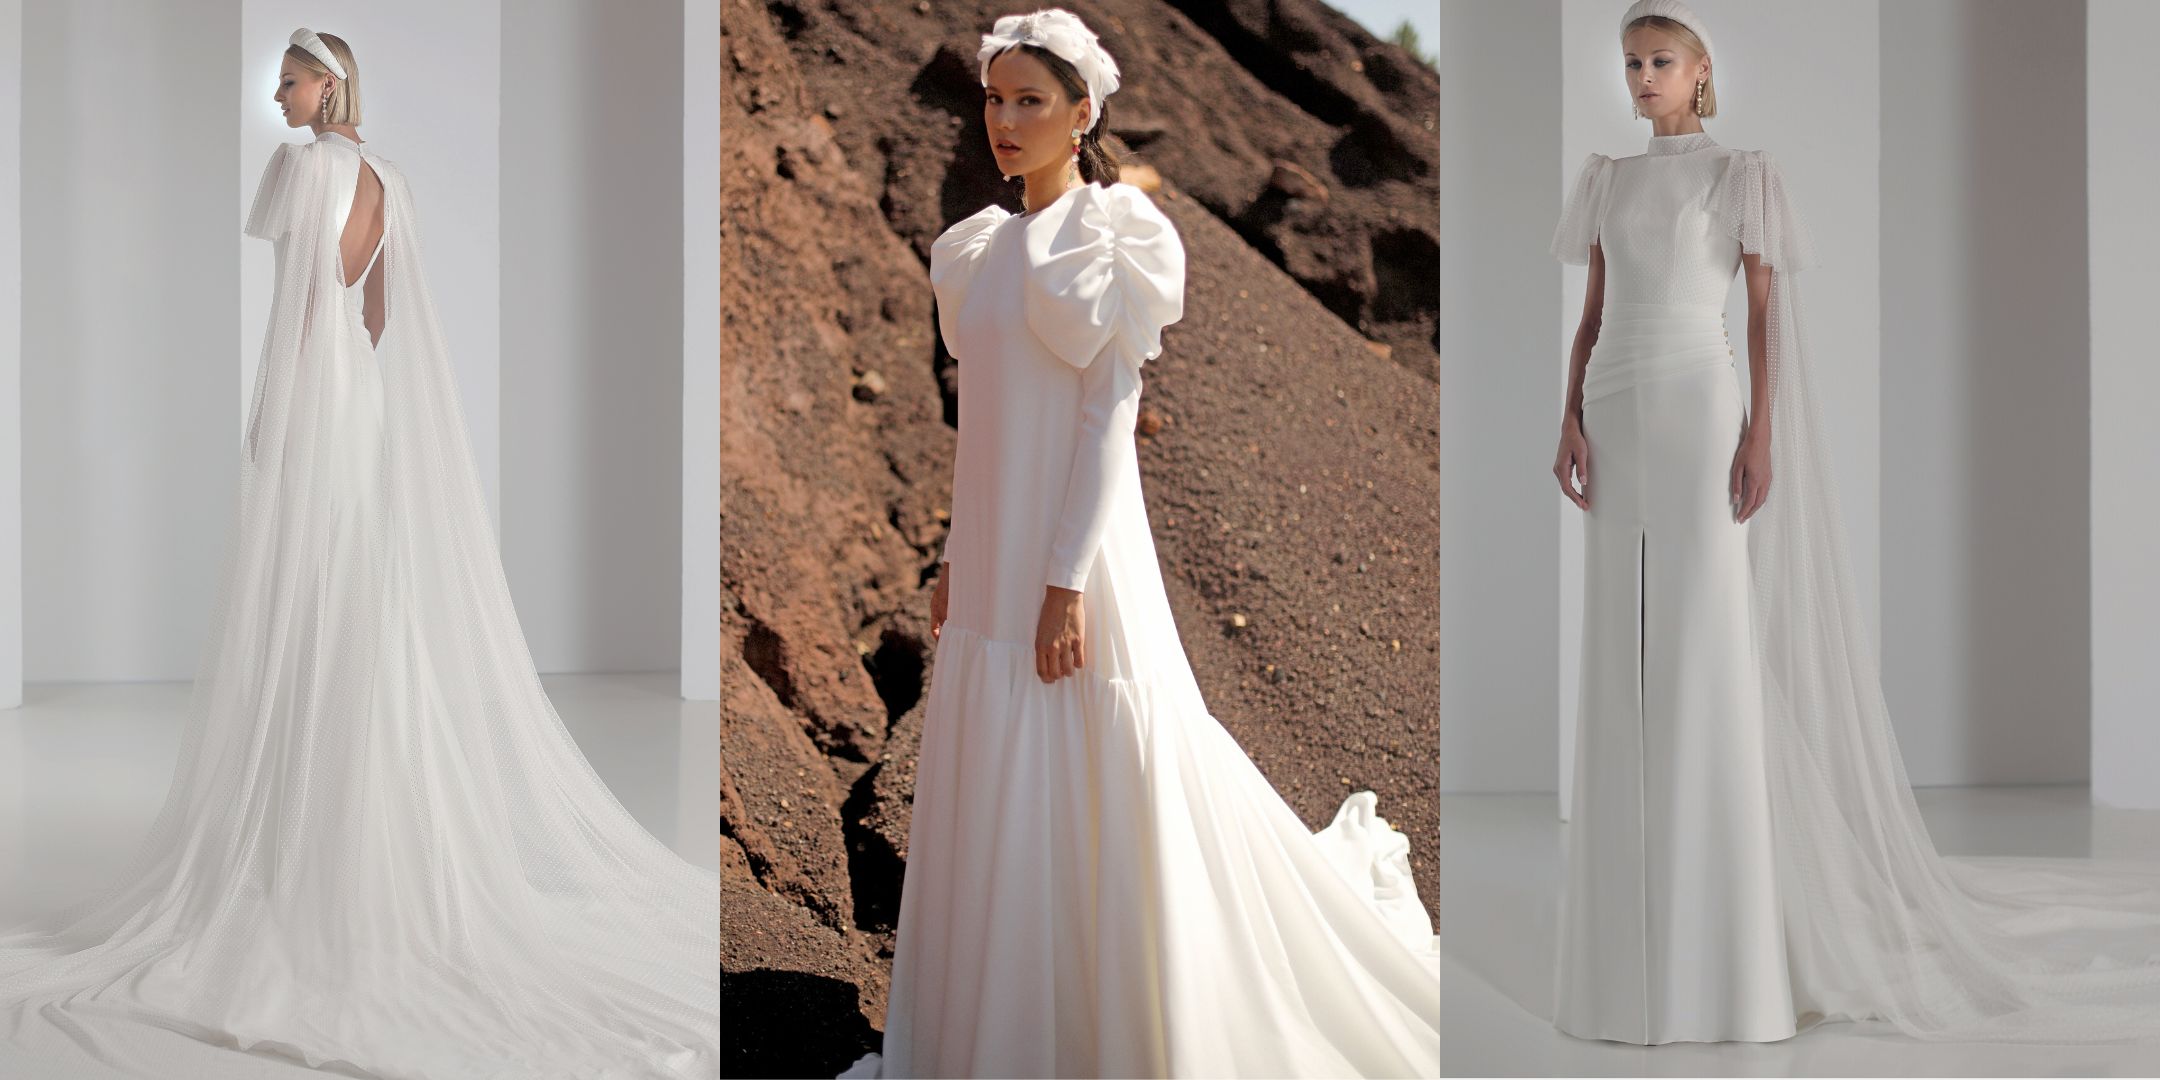 Modern wedding dresses as latest trend